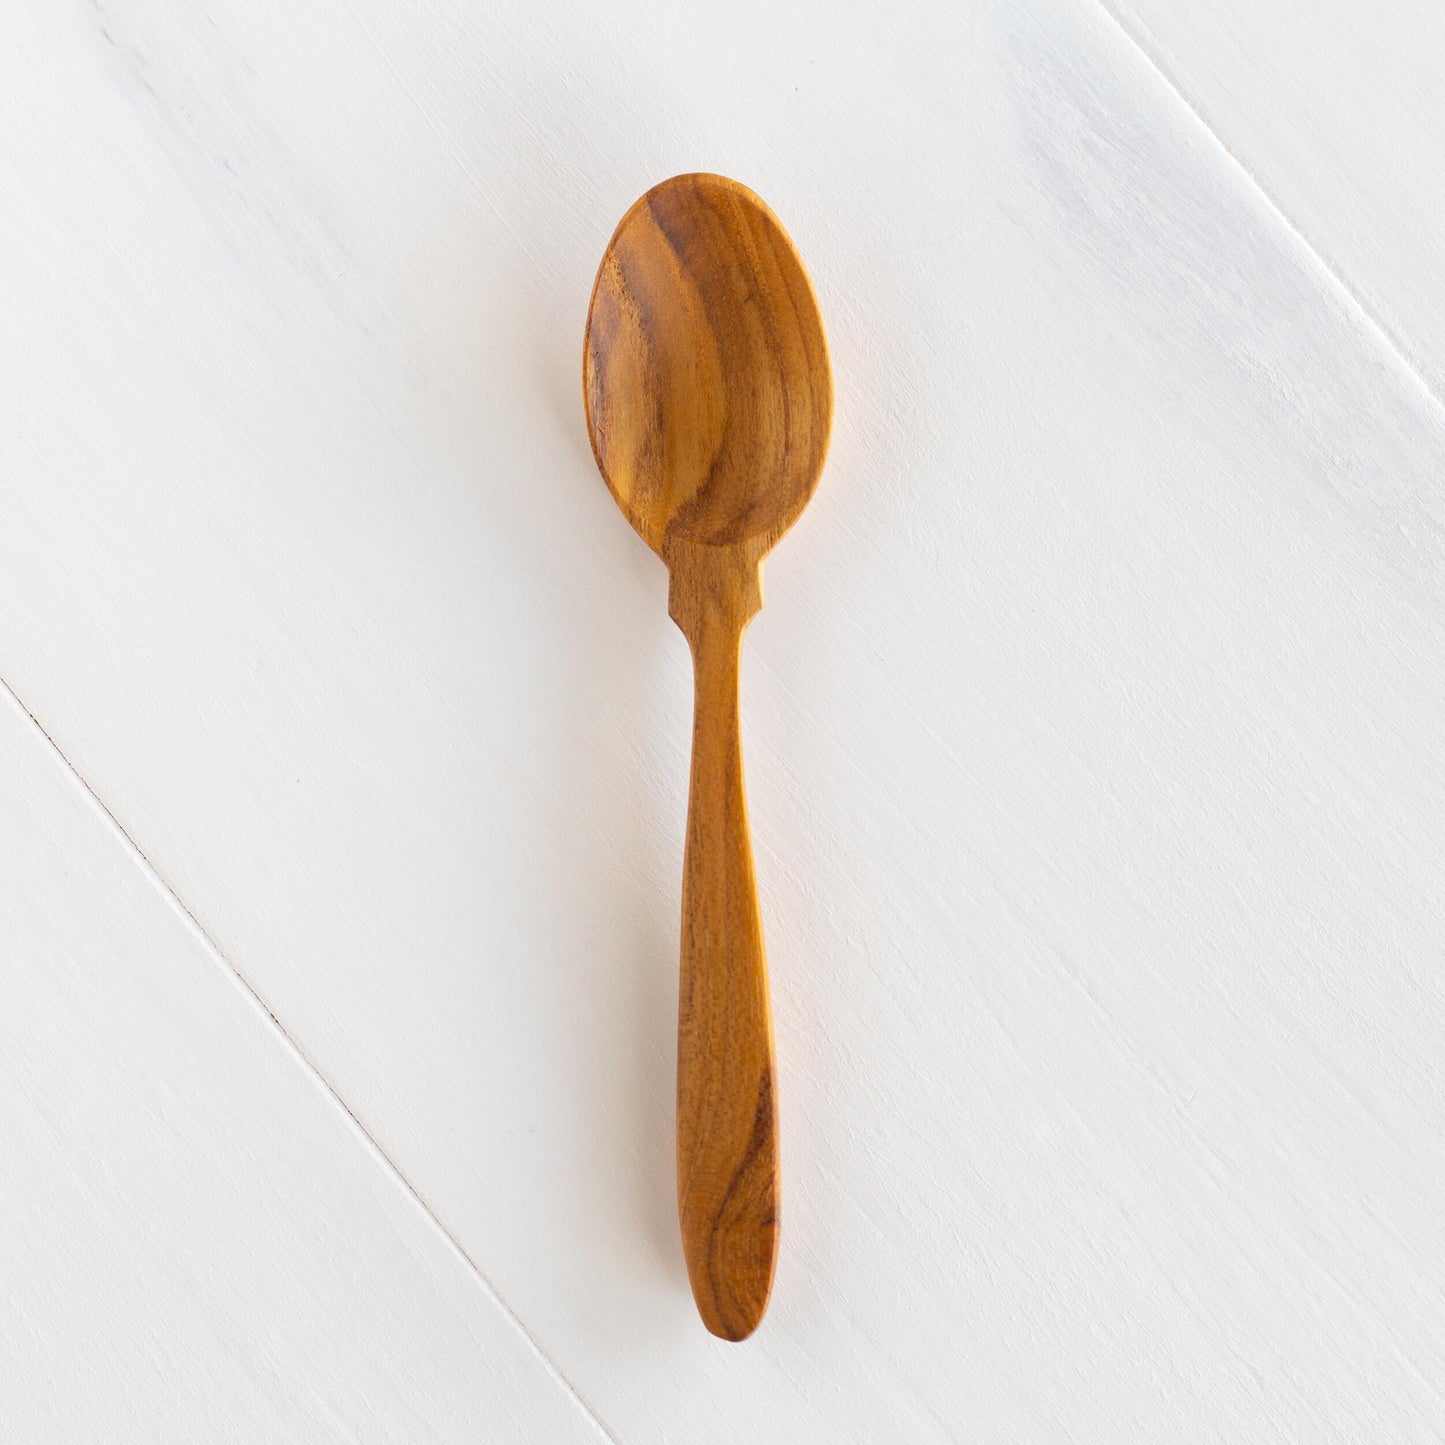 Teak Wood Spoon – at ArtfulTea